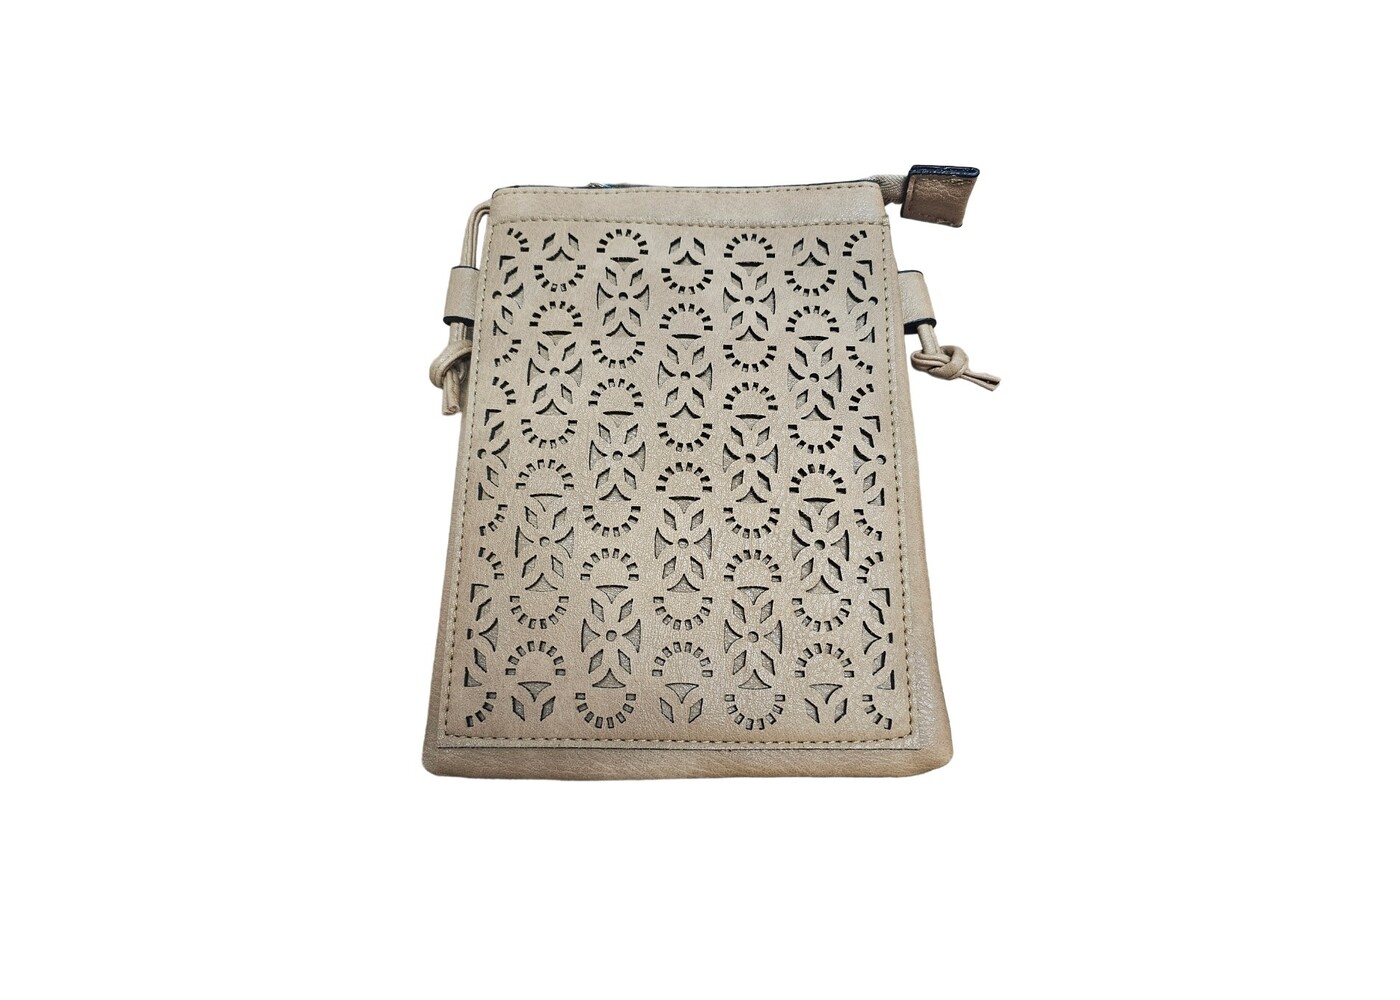 Ivys Clothing & Fashion Accessories Tan Crossover Handbag